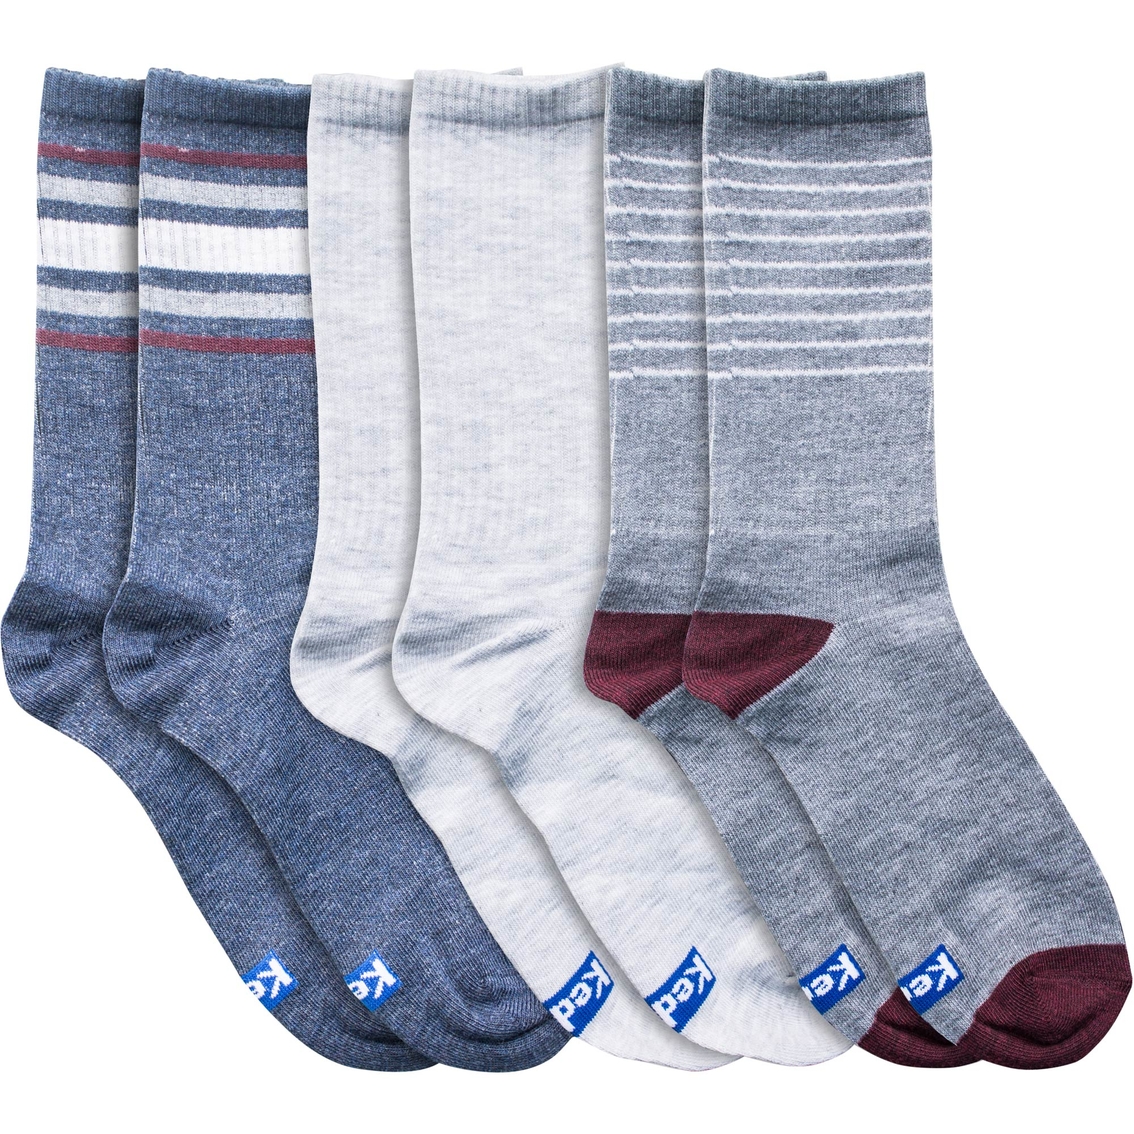 Keds Ribbed Crew Socks 3 Pk. | Hosiery & Socks | Mother's Day Shop ...